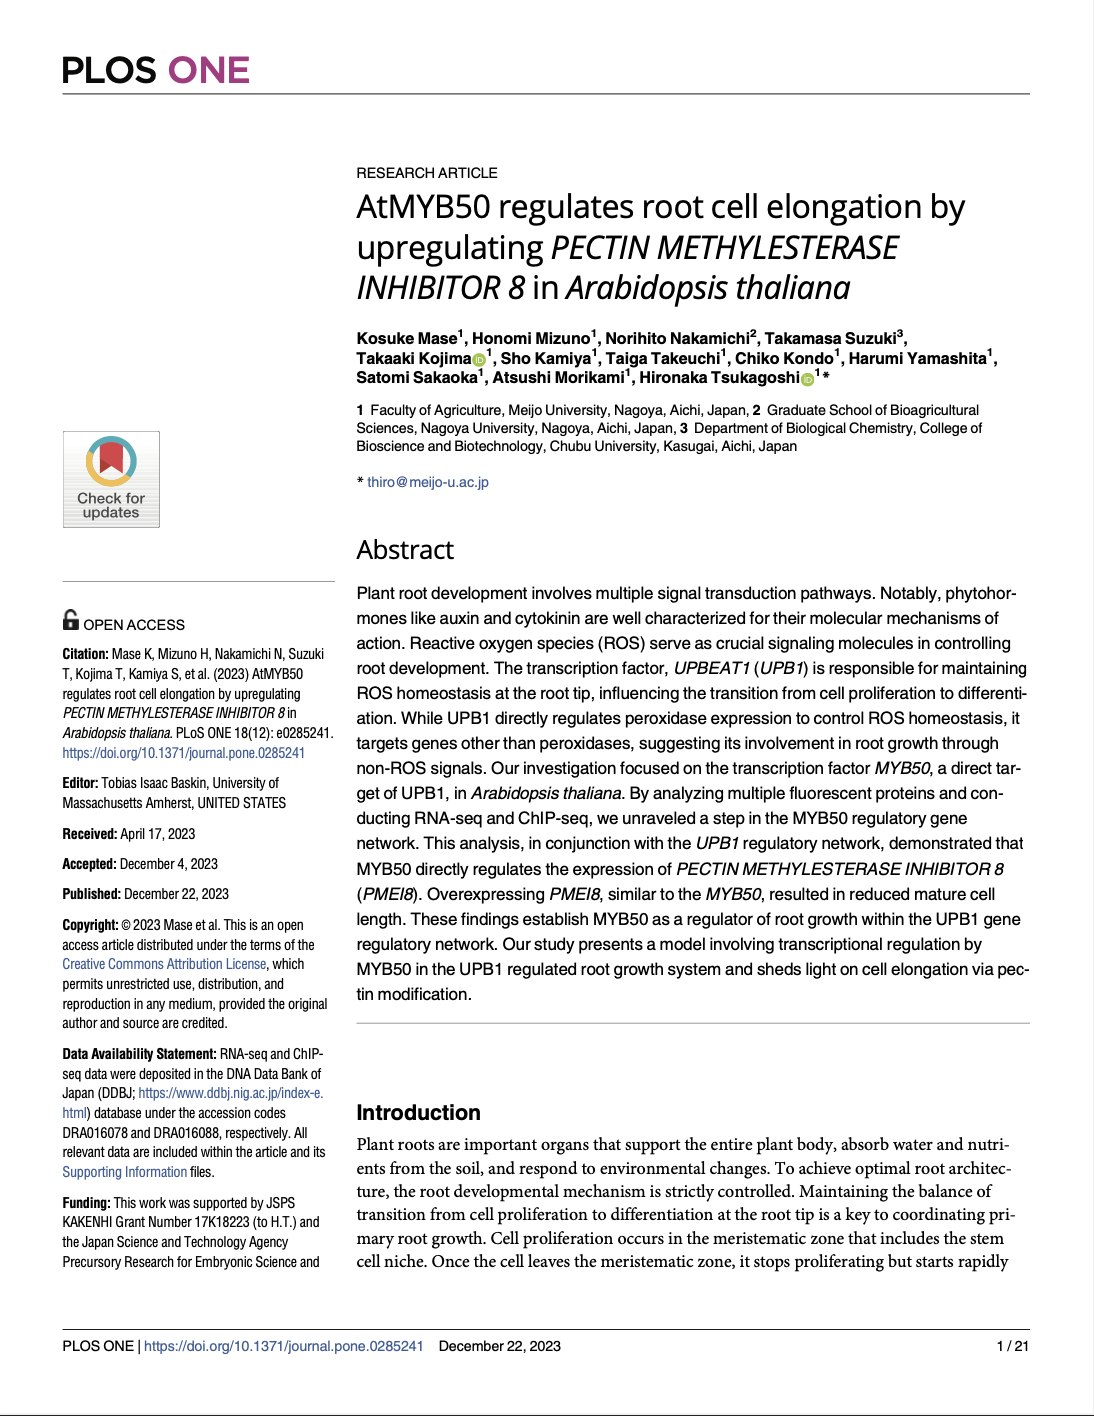 2023 AtMYB50 regulates root cell elongation by upregulating PECTIN METHYLESTERASE INHIBITOR 8 in Arabidopsis thaliana.png